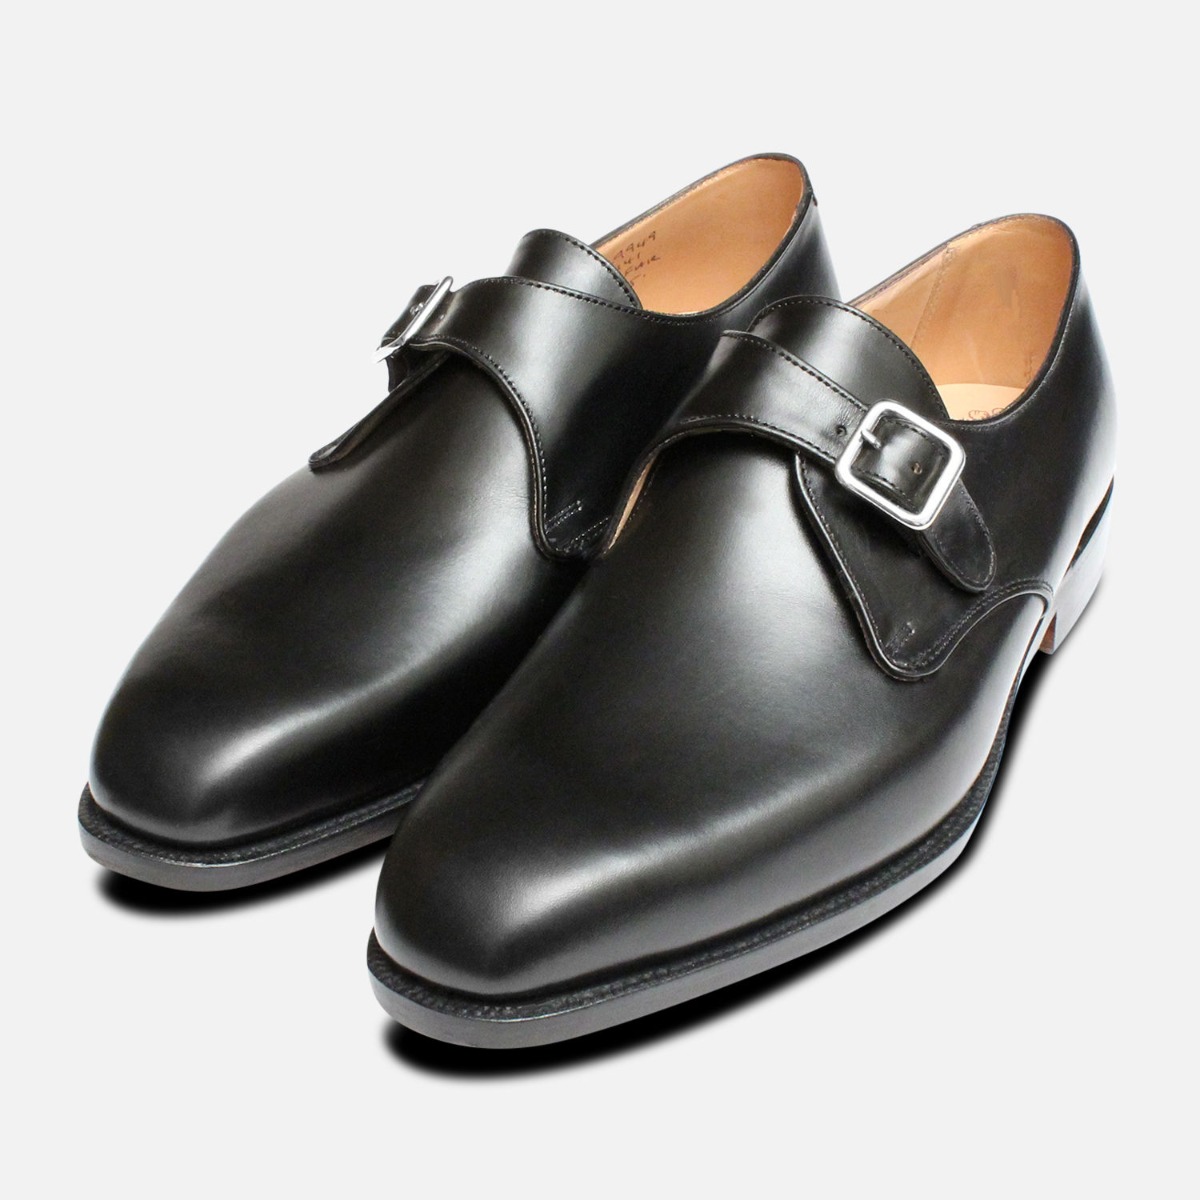 black buckle shoe